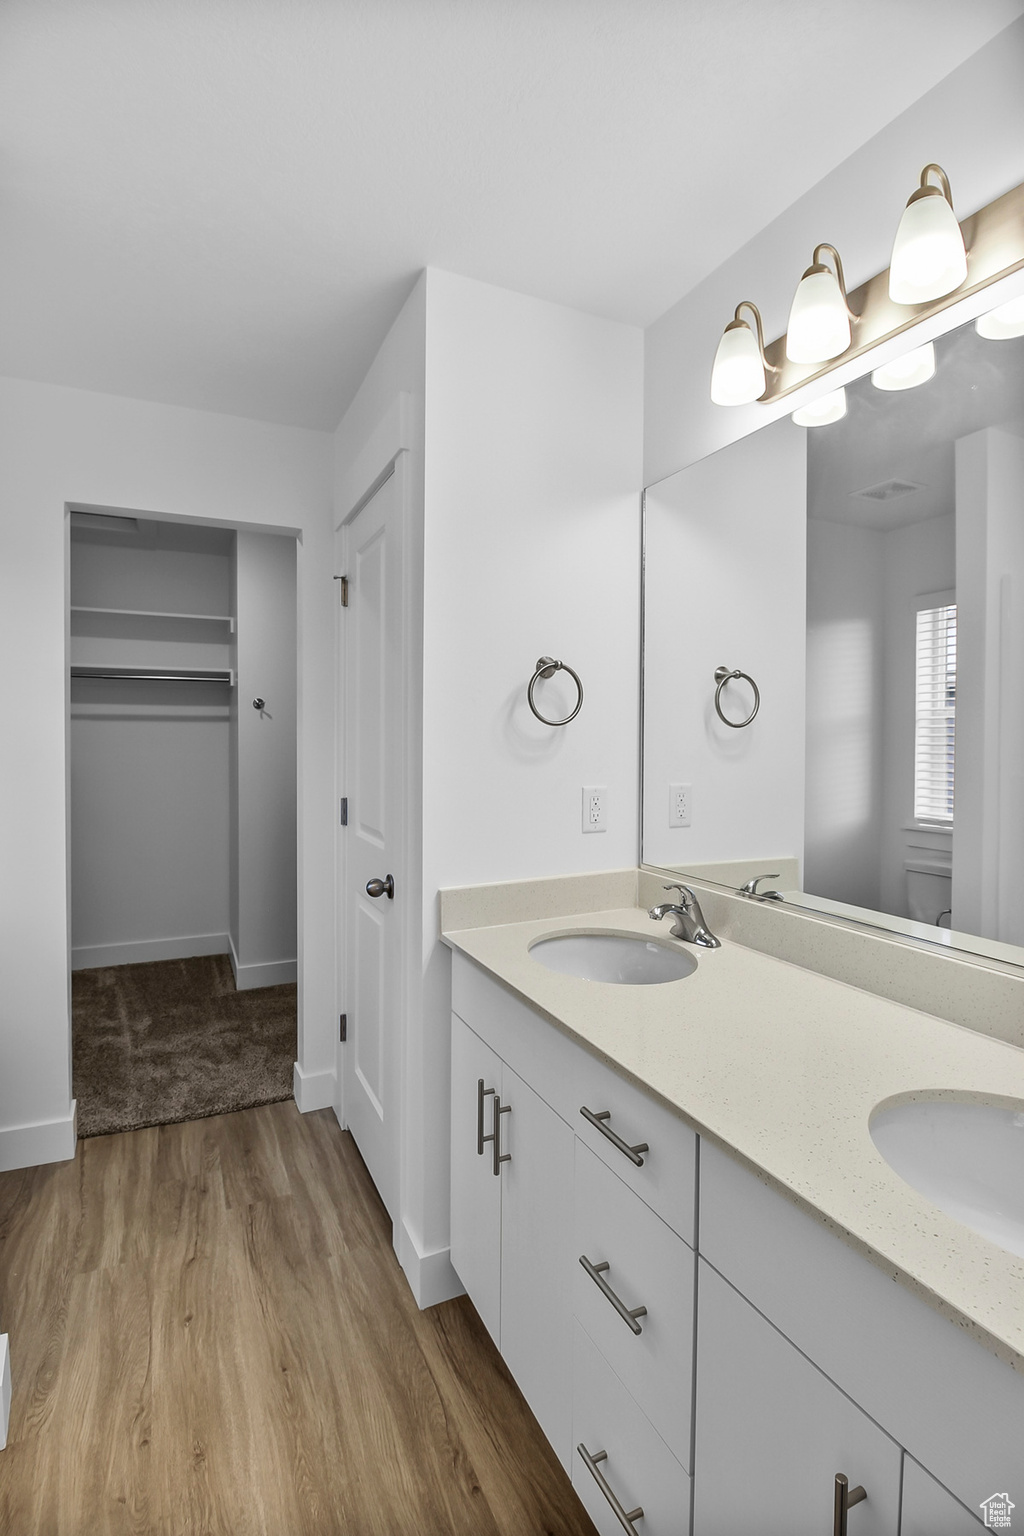 Bathroom featuring oversized vanity, hardwood / wood-style floors, and double sink